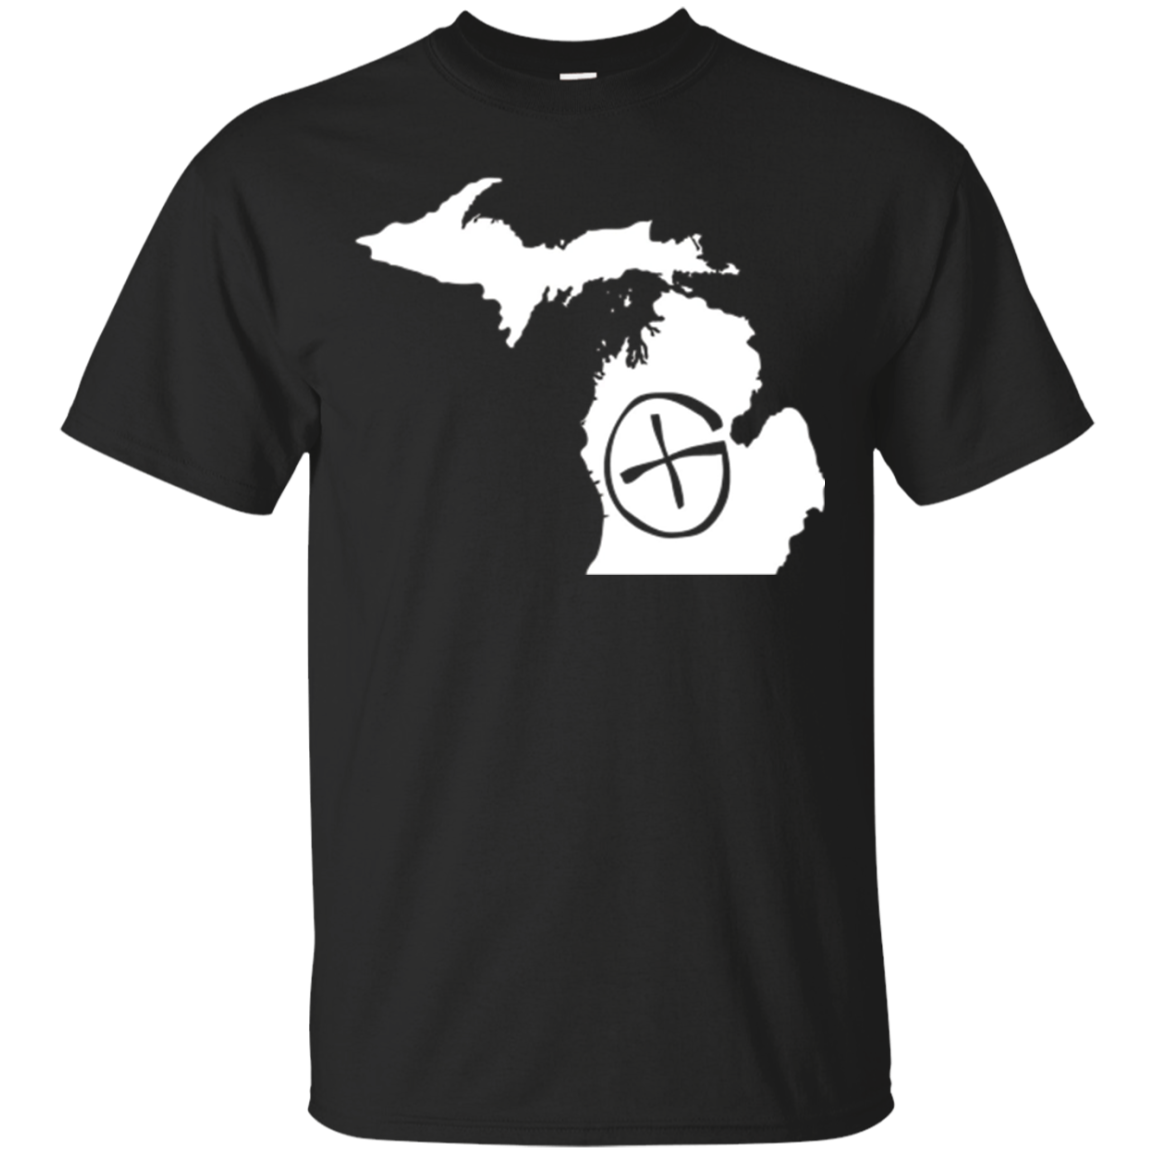 Michigan Geocaching Symbol Shirt, Geocache Cache Hunter